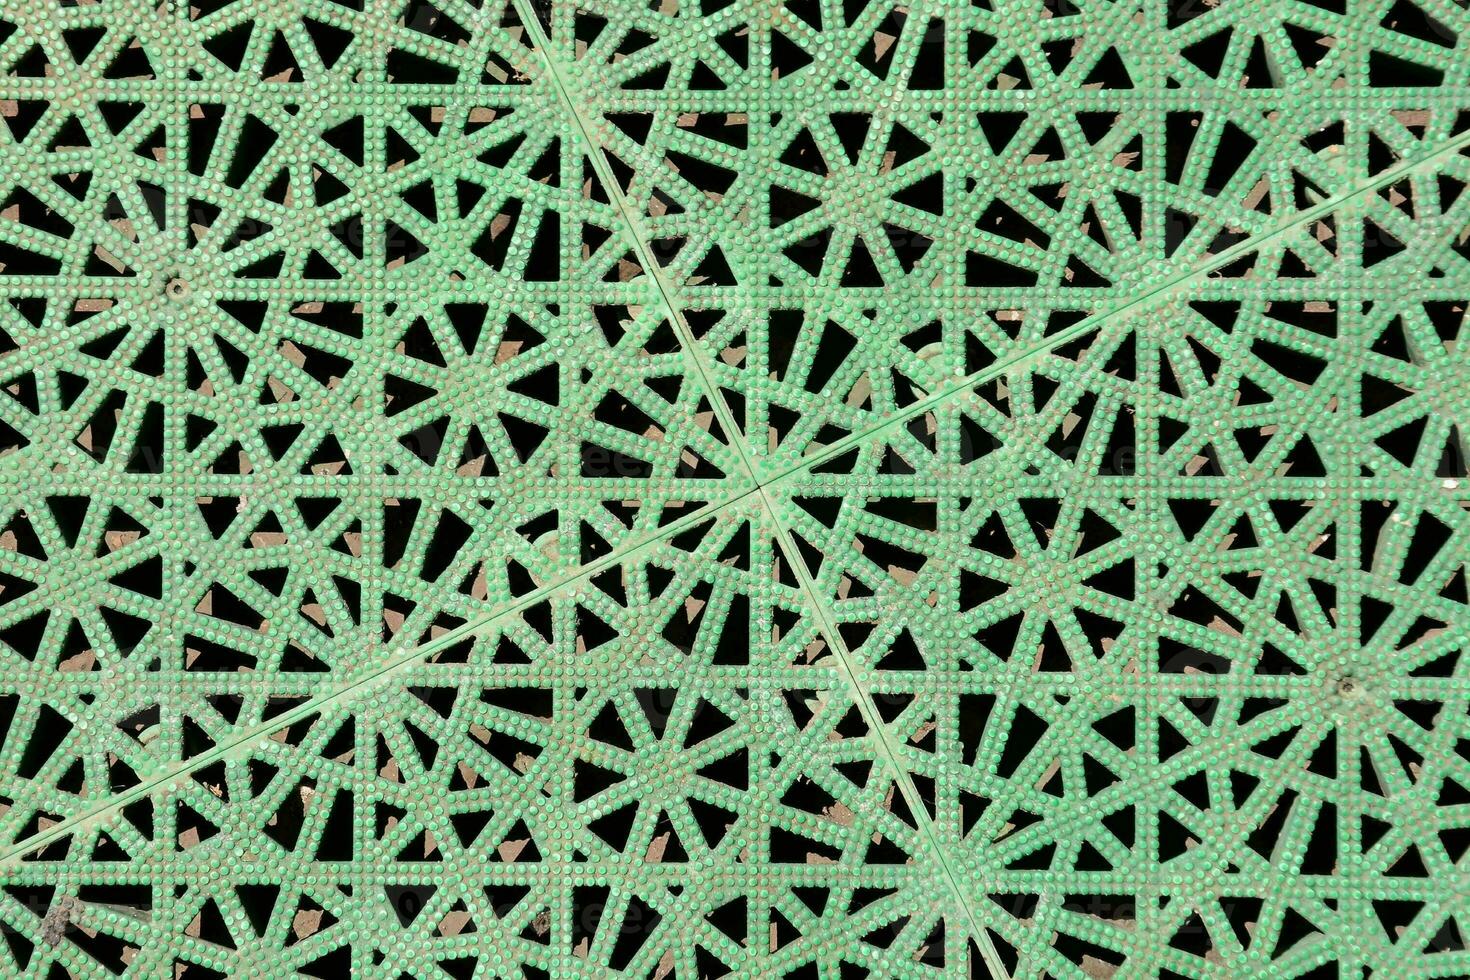 en grön gitter mönster med hål i den foto